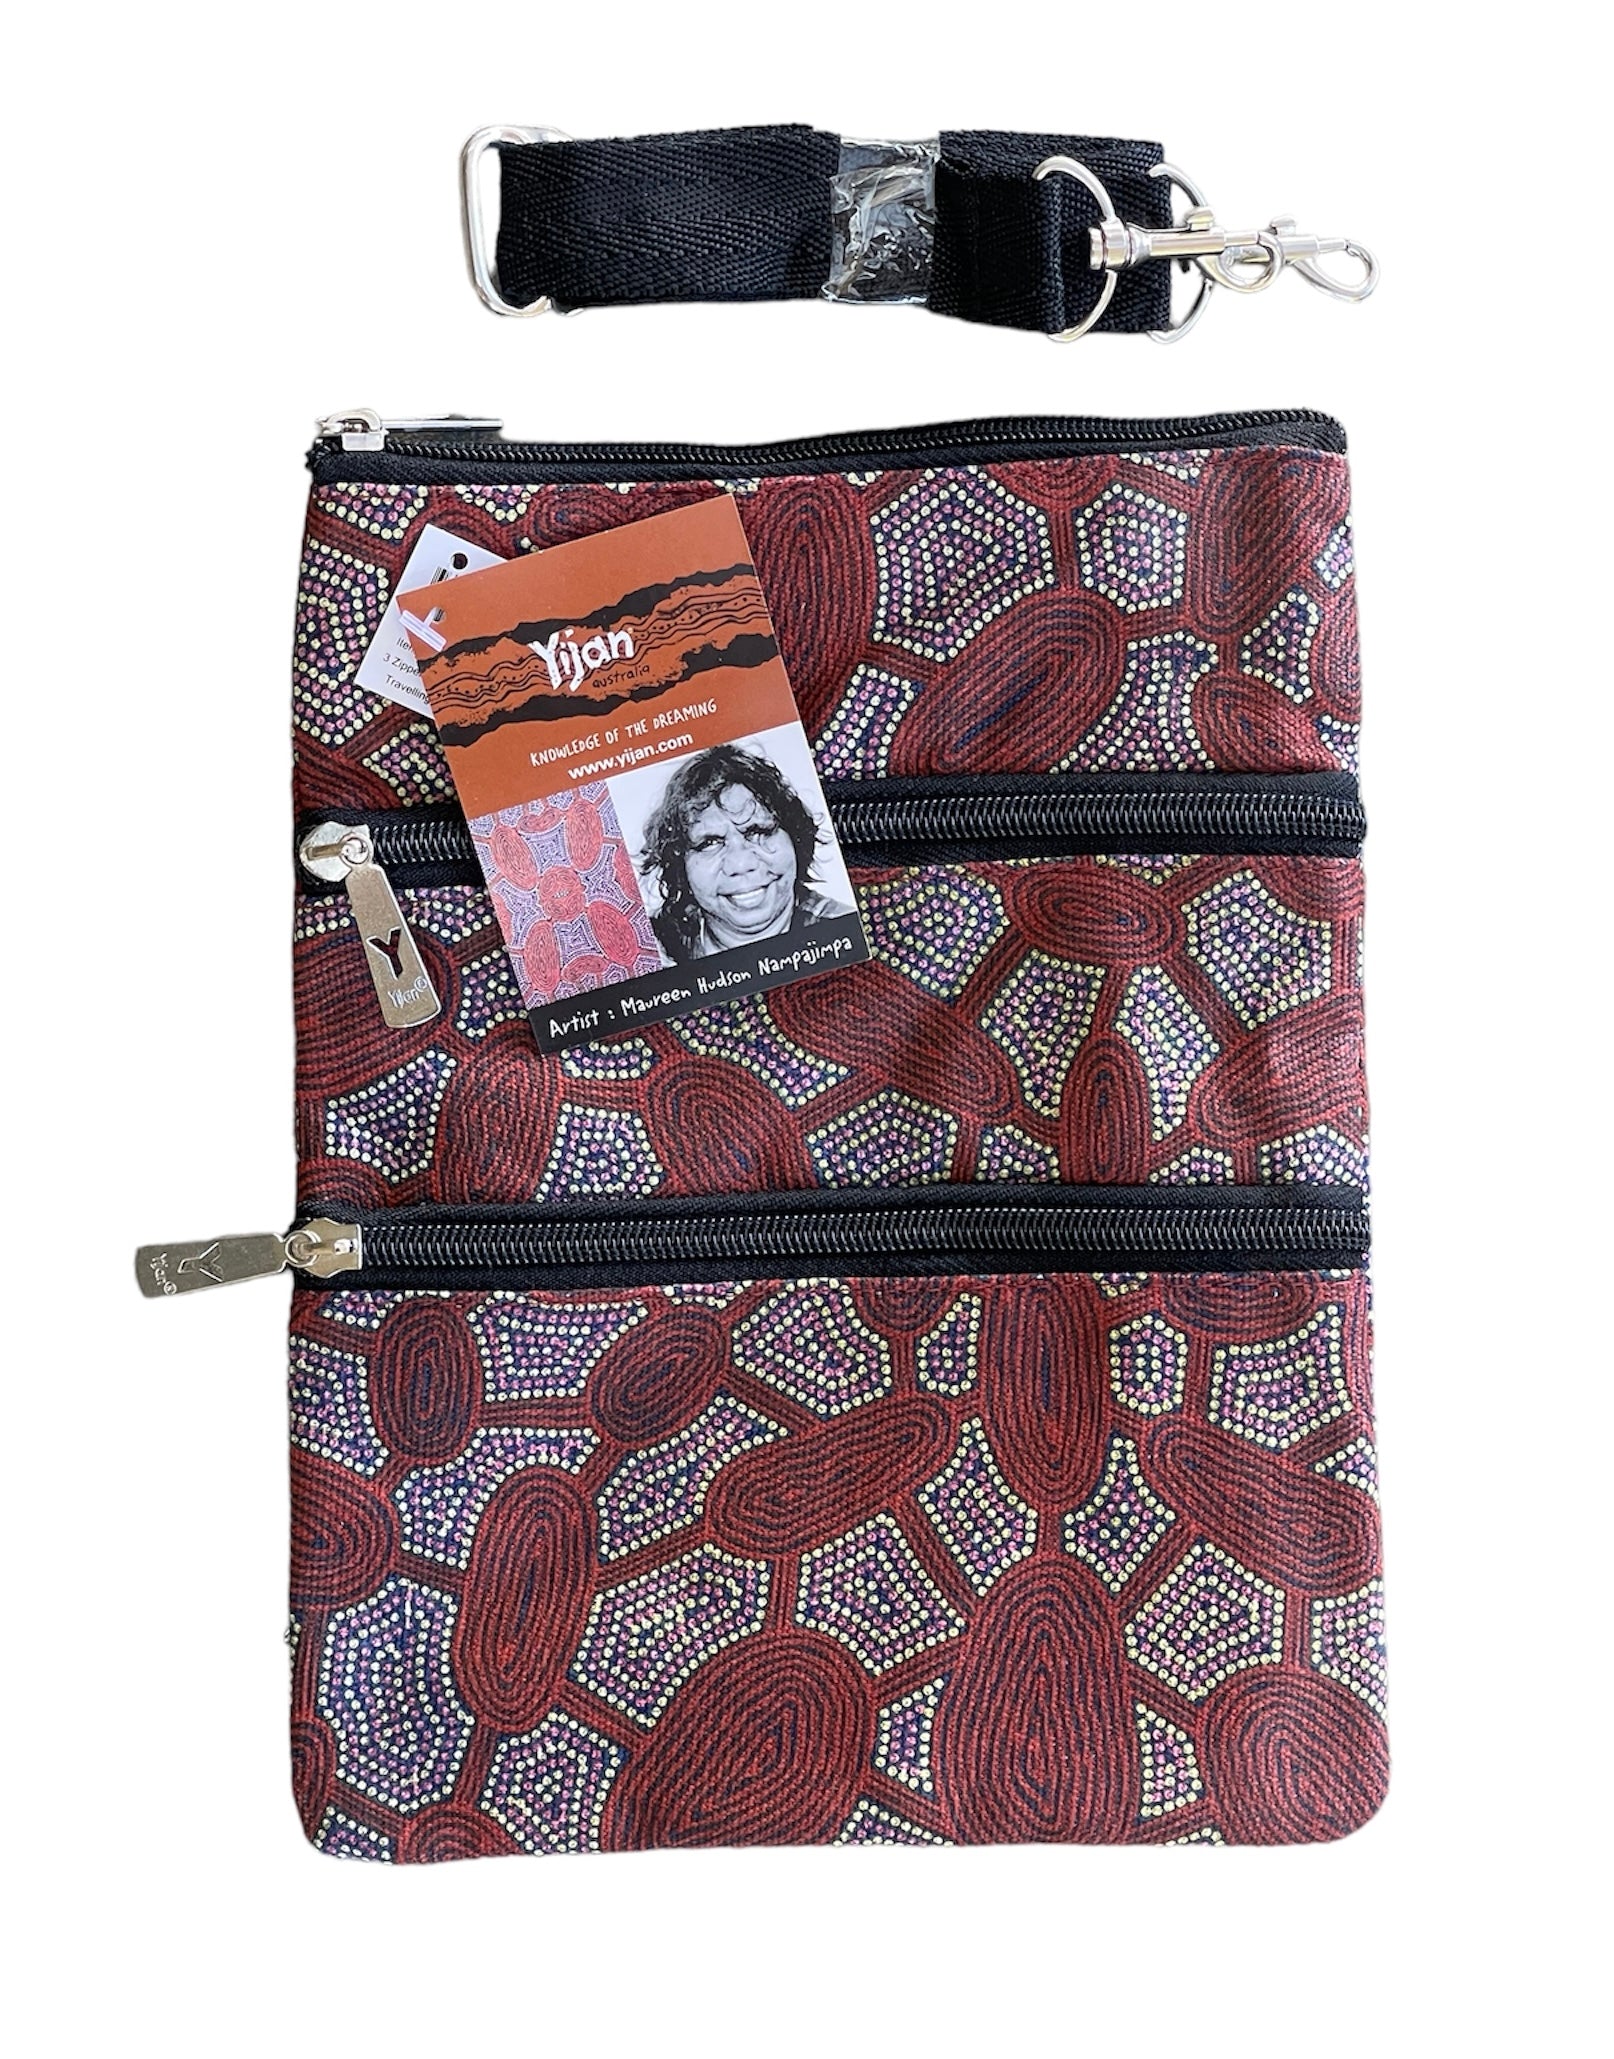 3 Zip Shoulder Bag - Maureen Hudson - Women's Travelling Dreaming (Red)